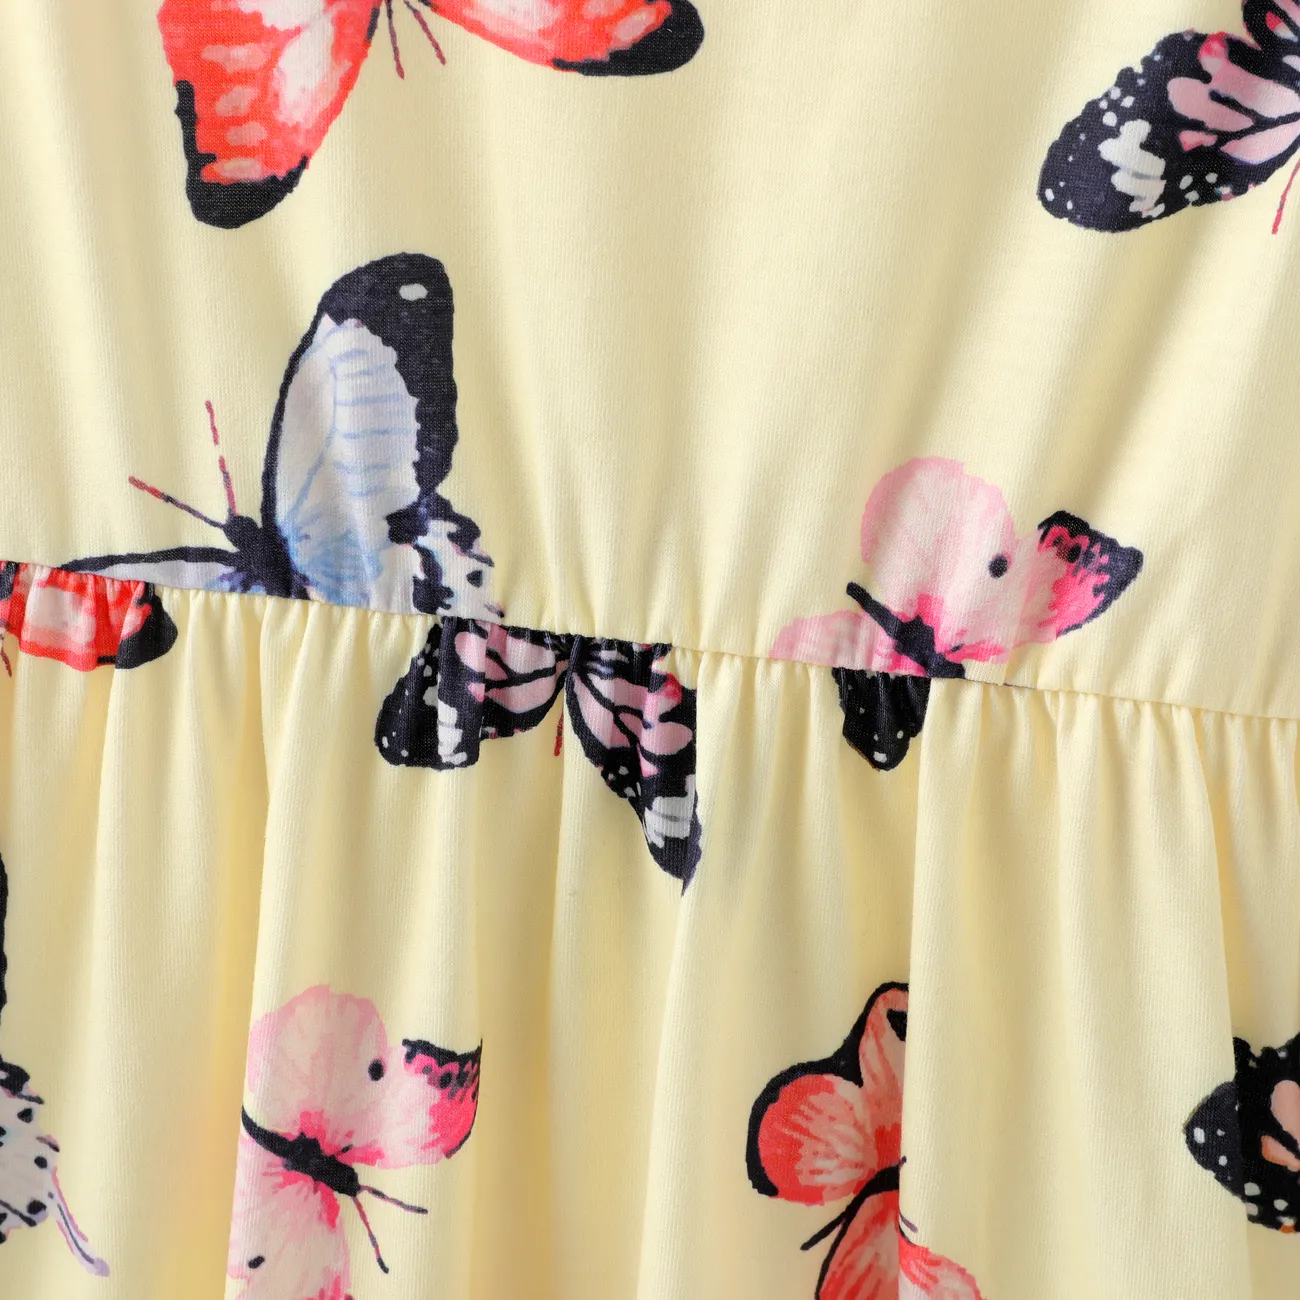 Easter Kid Girl Bunny Butterfly Print Sleeveless Dress Yellow big image 1